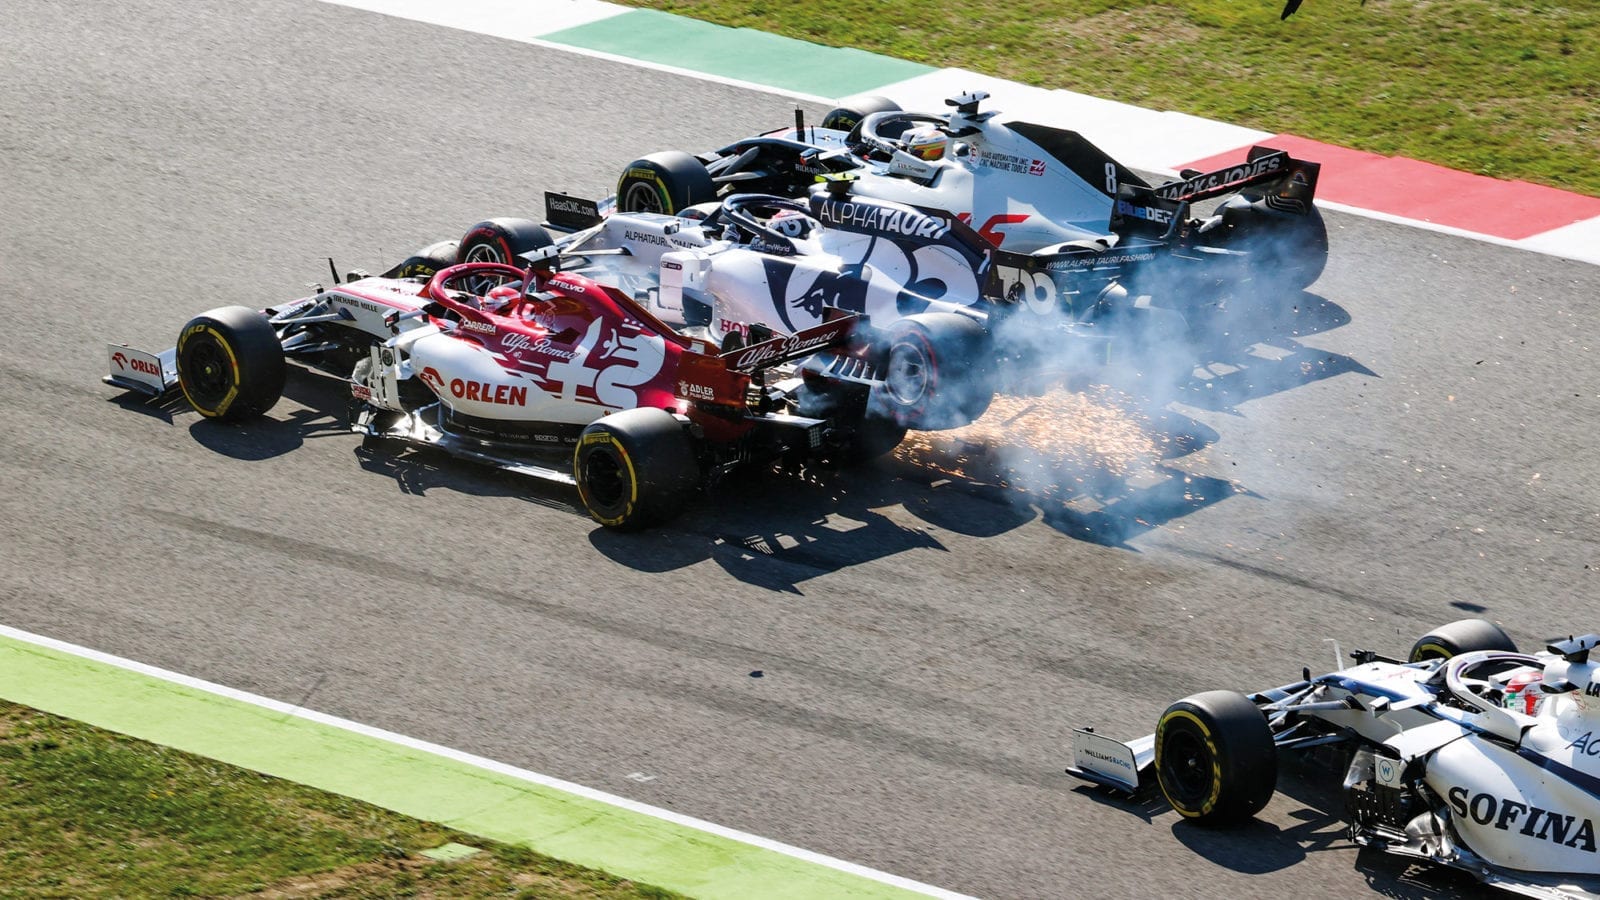 Kimi Raikkonen Pierre Gasly and Romain Grosjean collide at Mugello during the 2020 F1 Tuscan Grand Prix